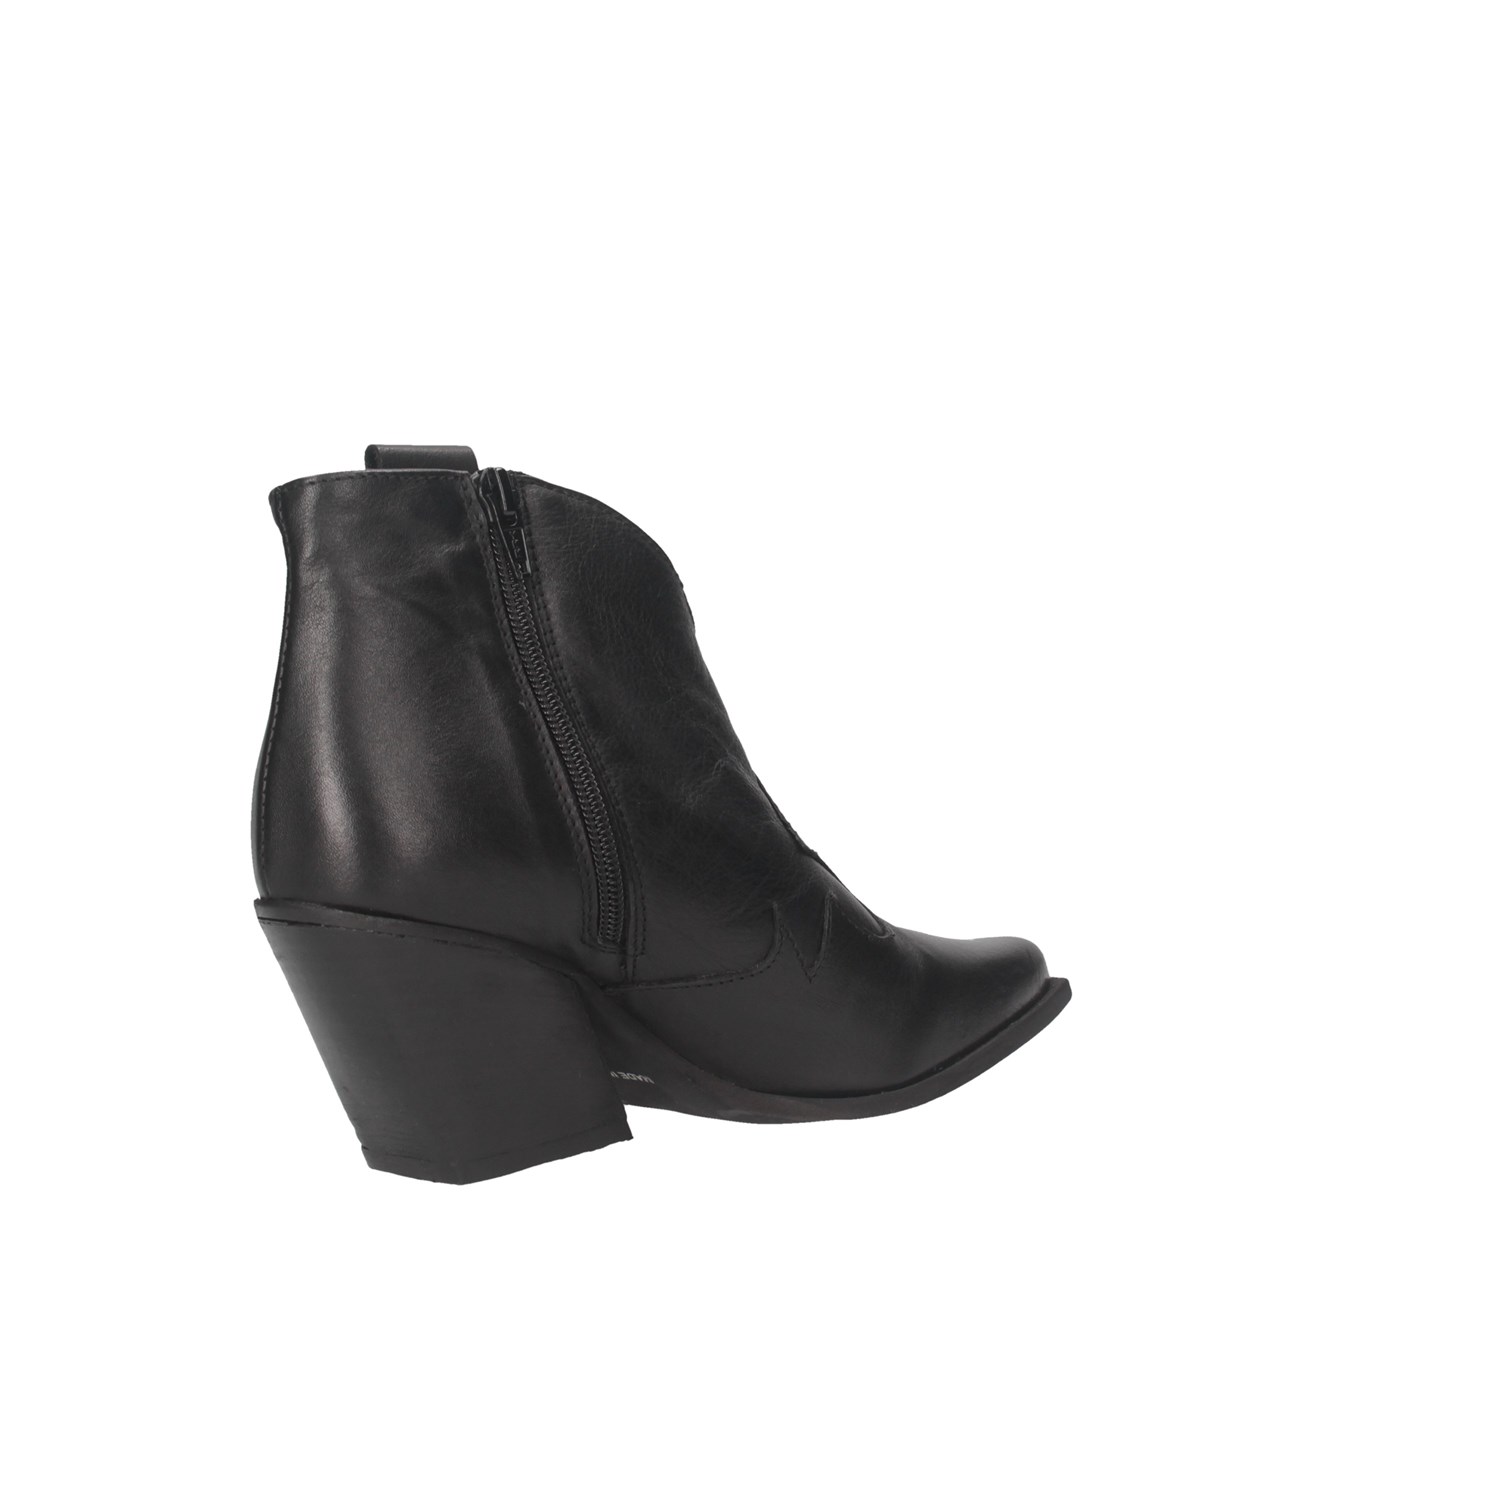 Marlena 7007 VITELLO Black Shoes Woman 